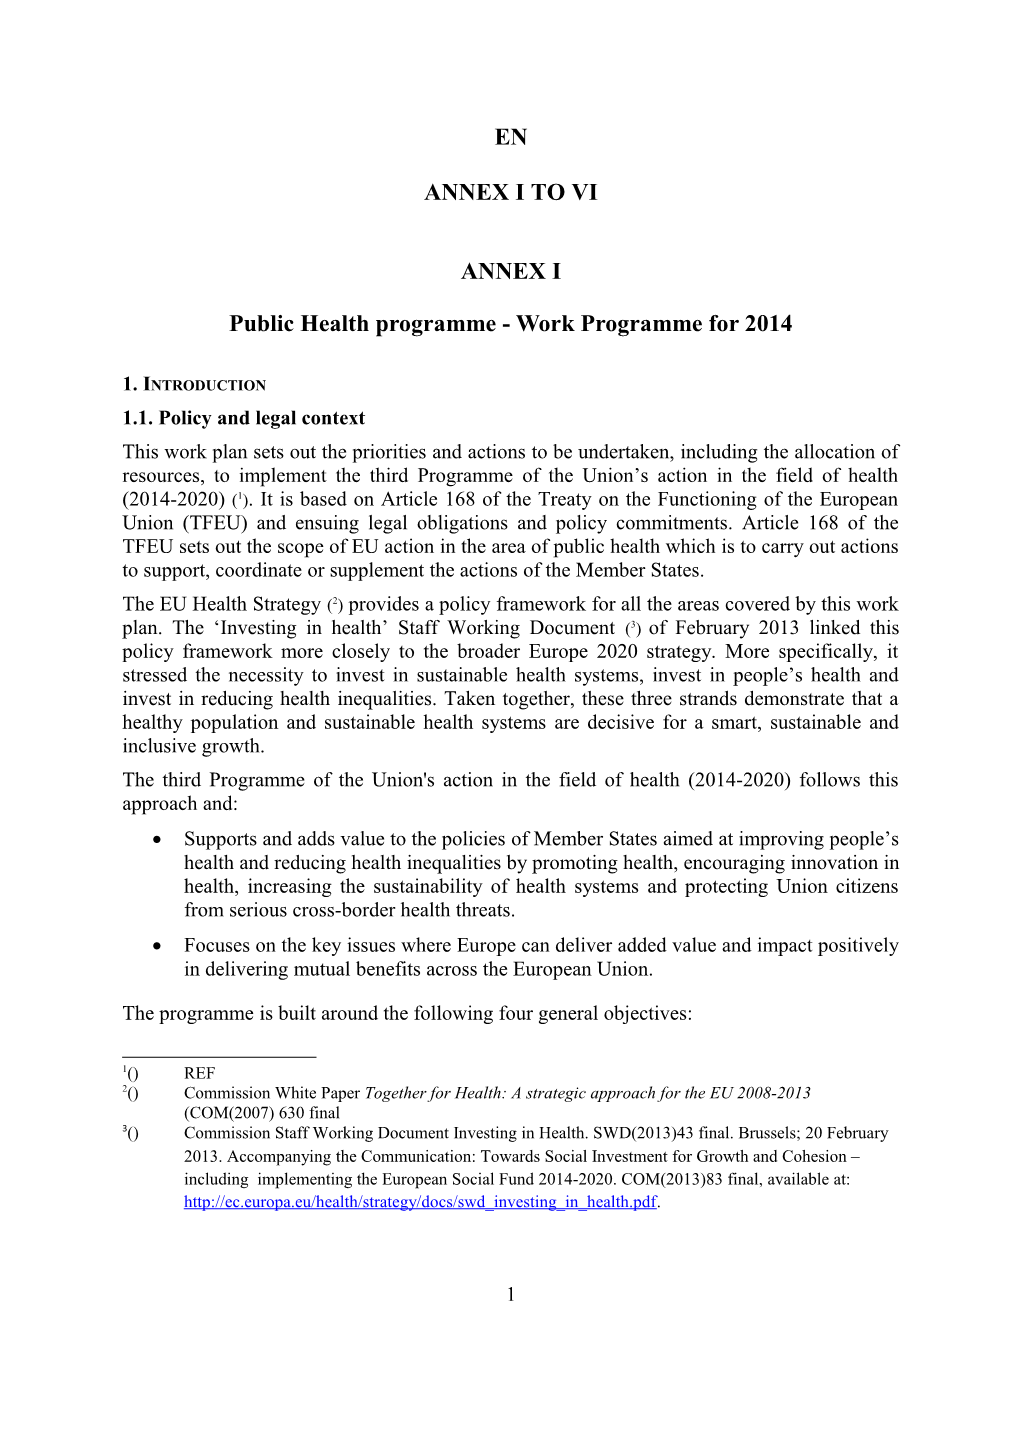 Public Health Programme - Work Programme for 2014